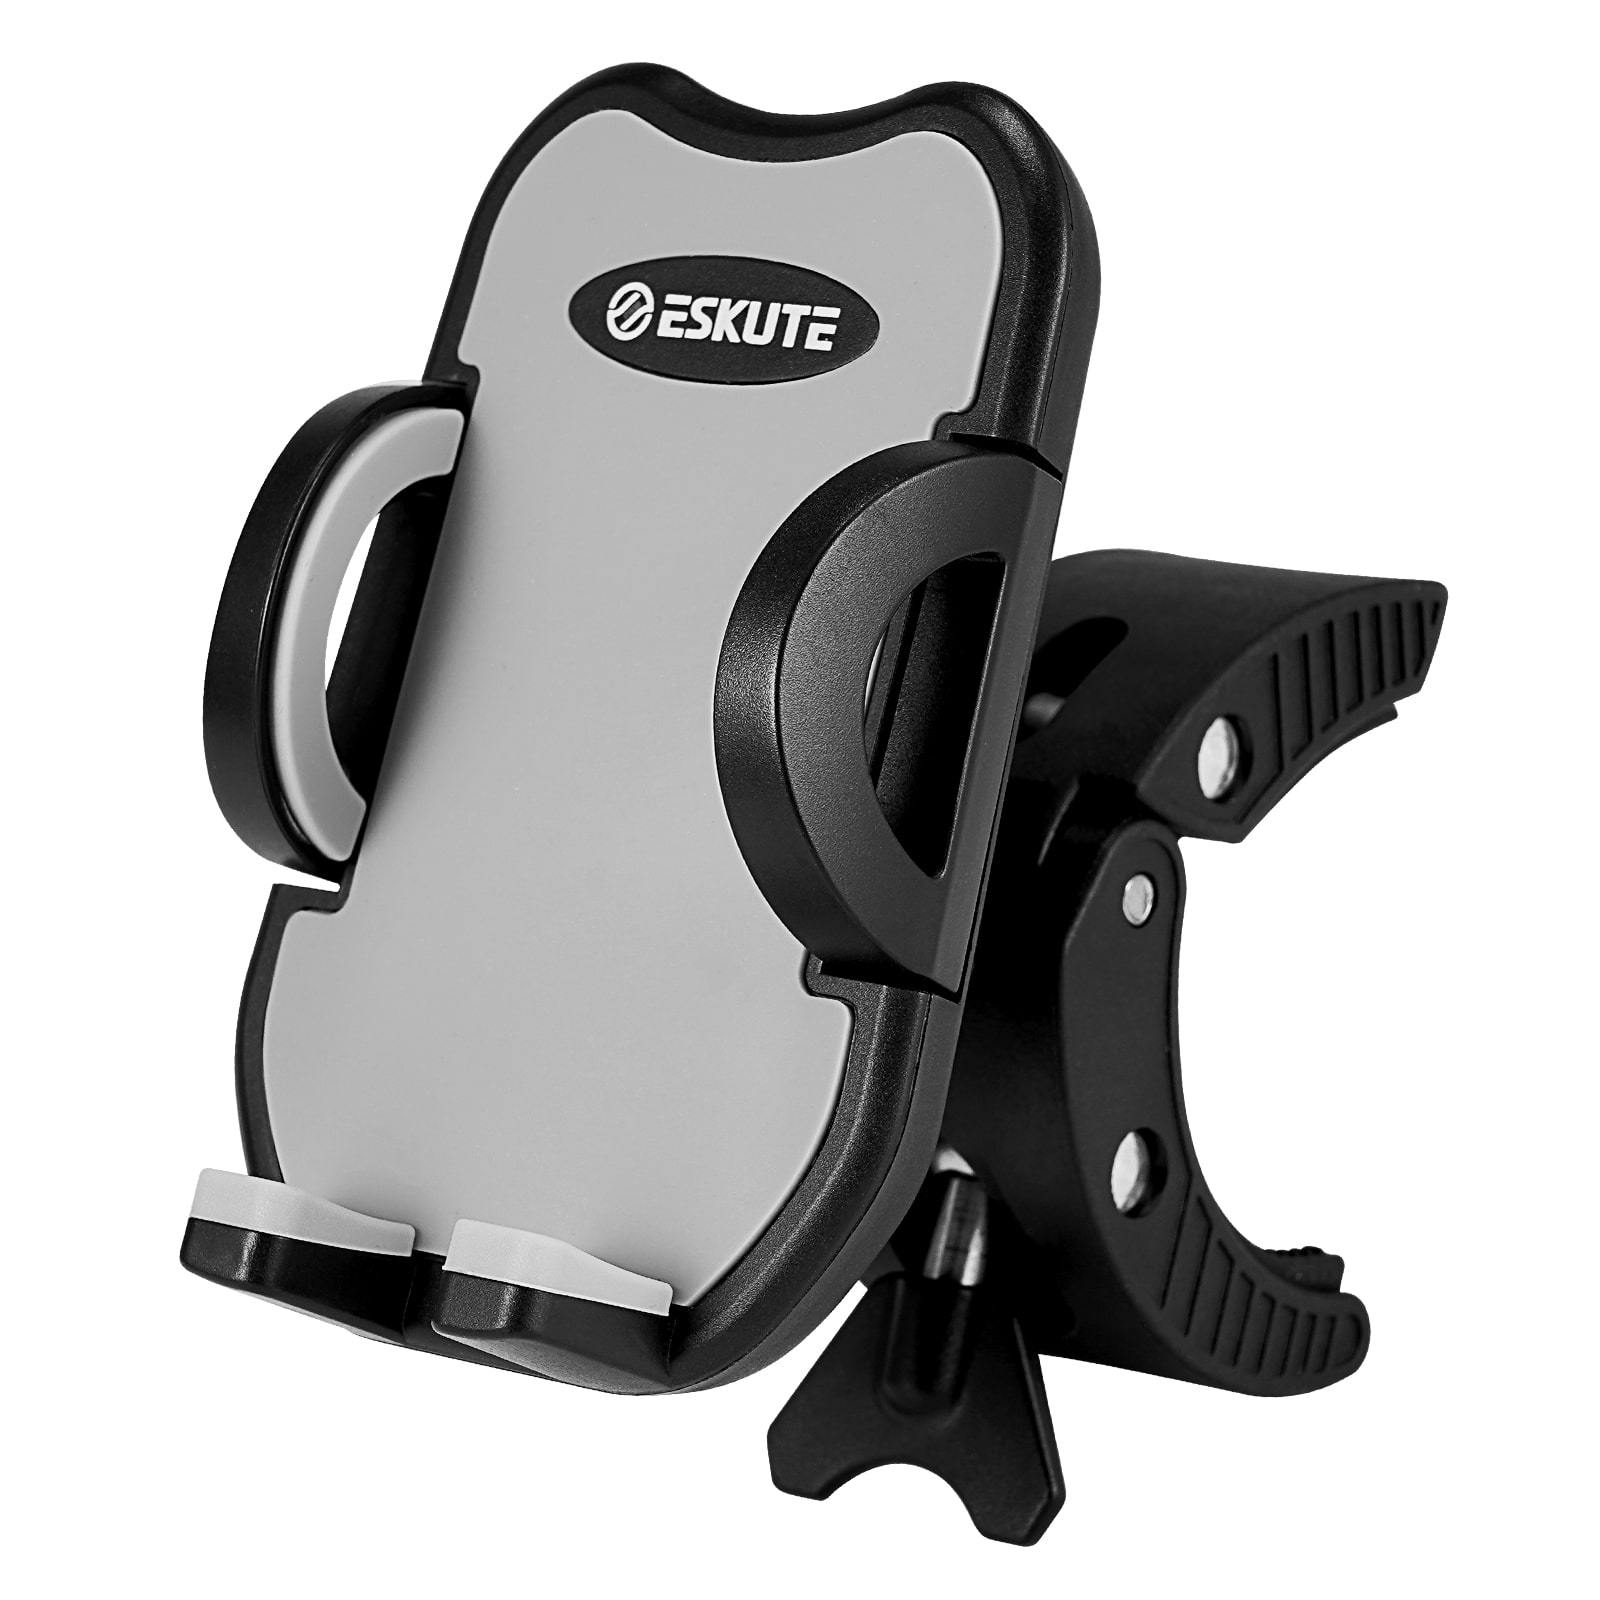 bike phone holder with ESKUTE logo 